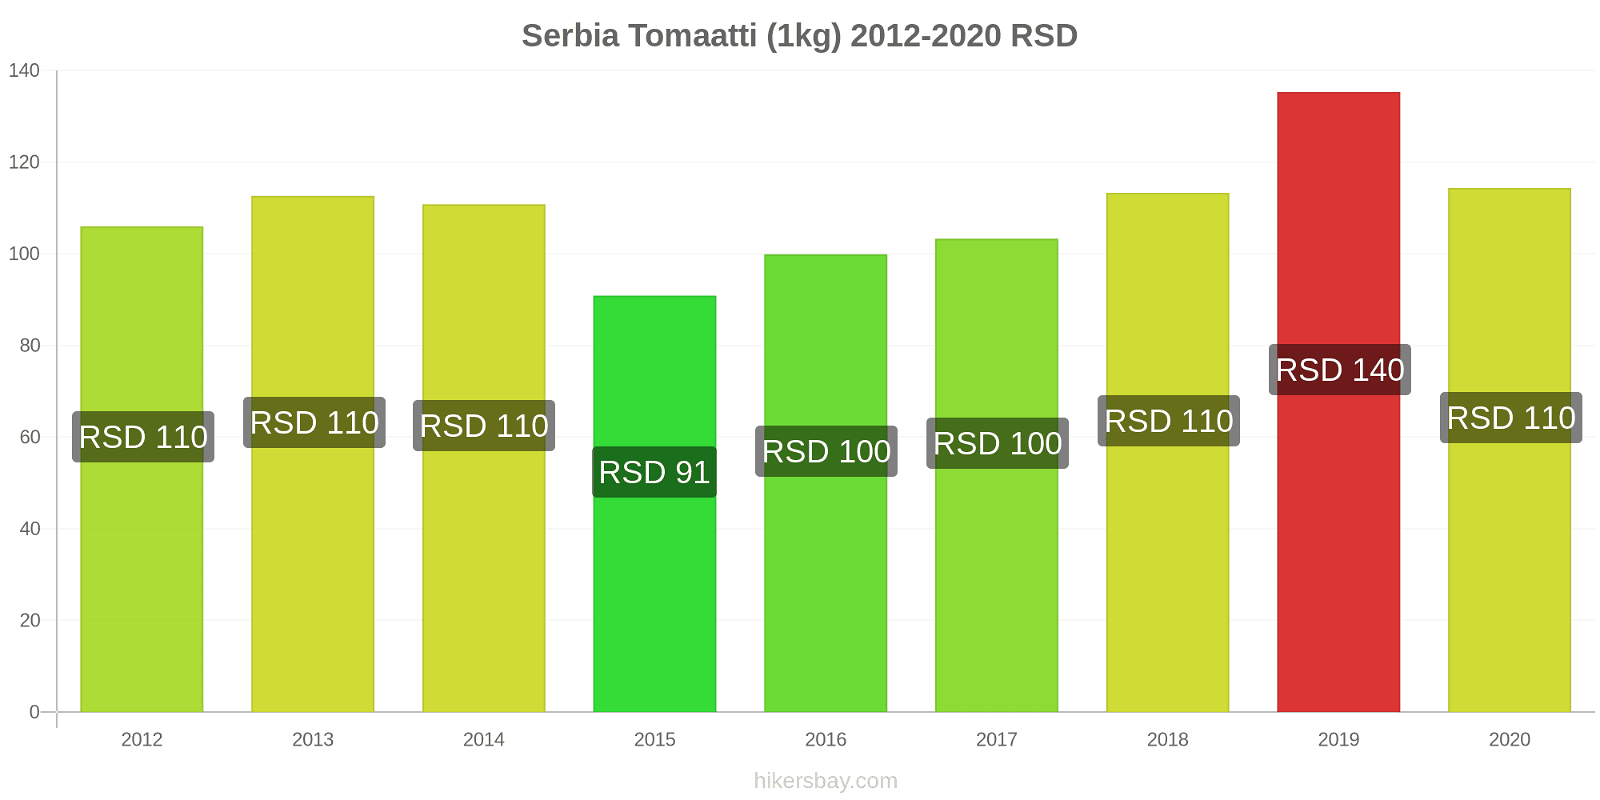 Serbia hintojen muutokset Tomaatti (1kg) hikersbay.com